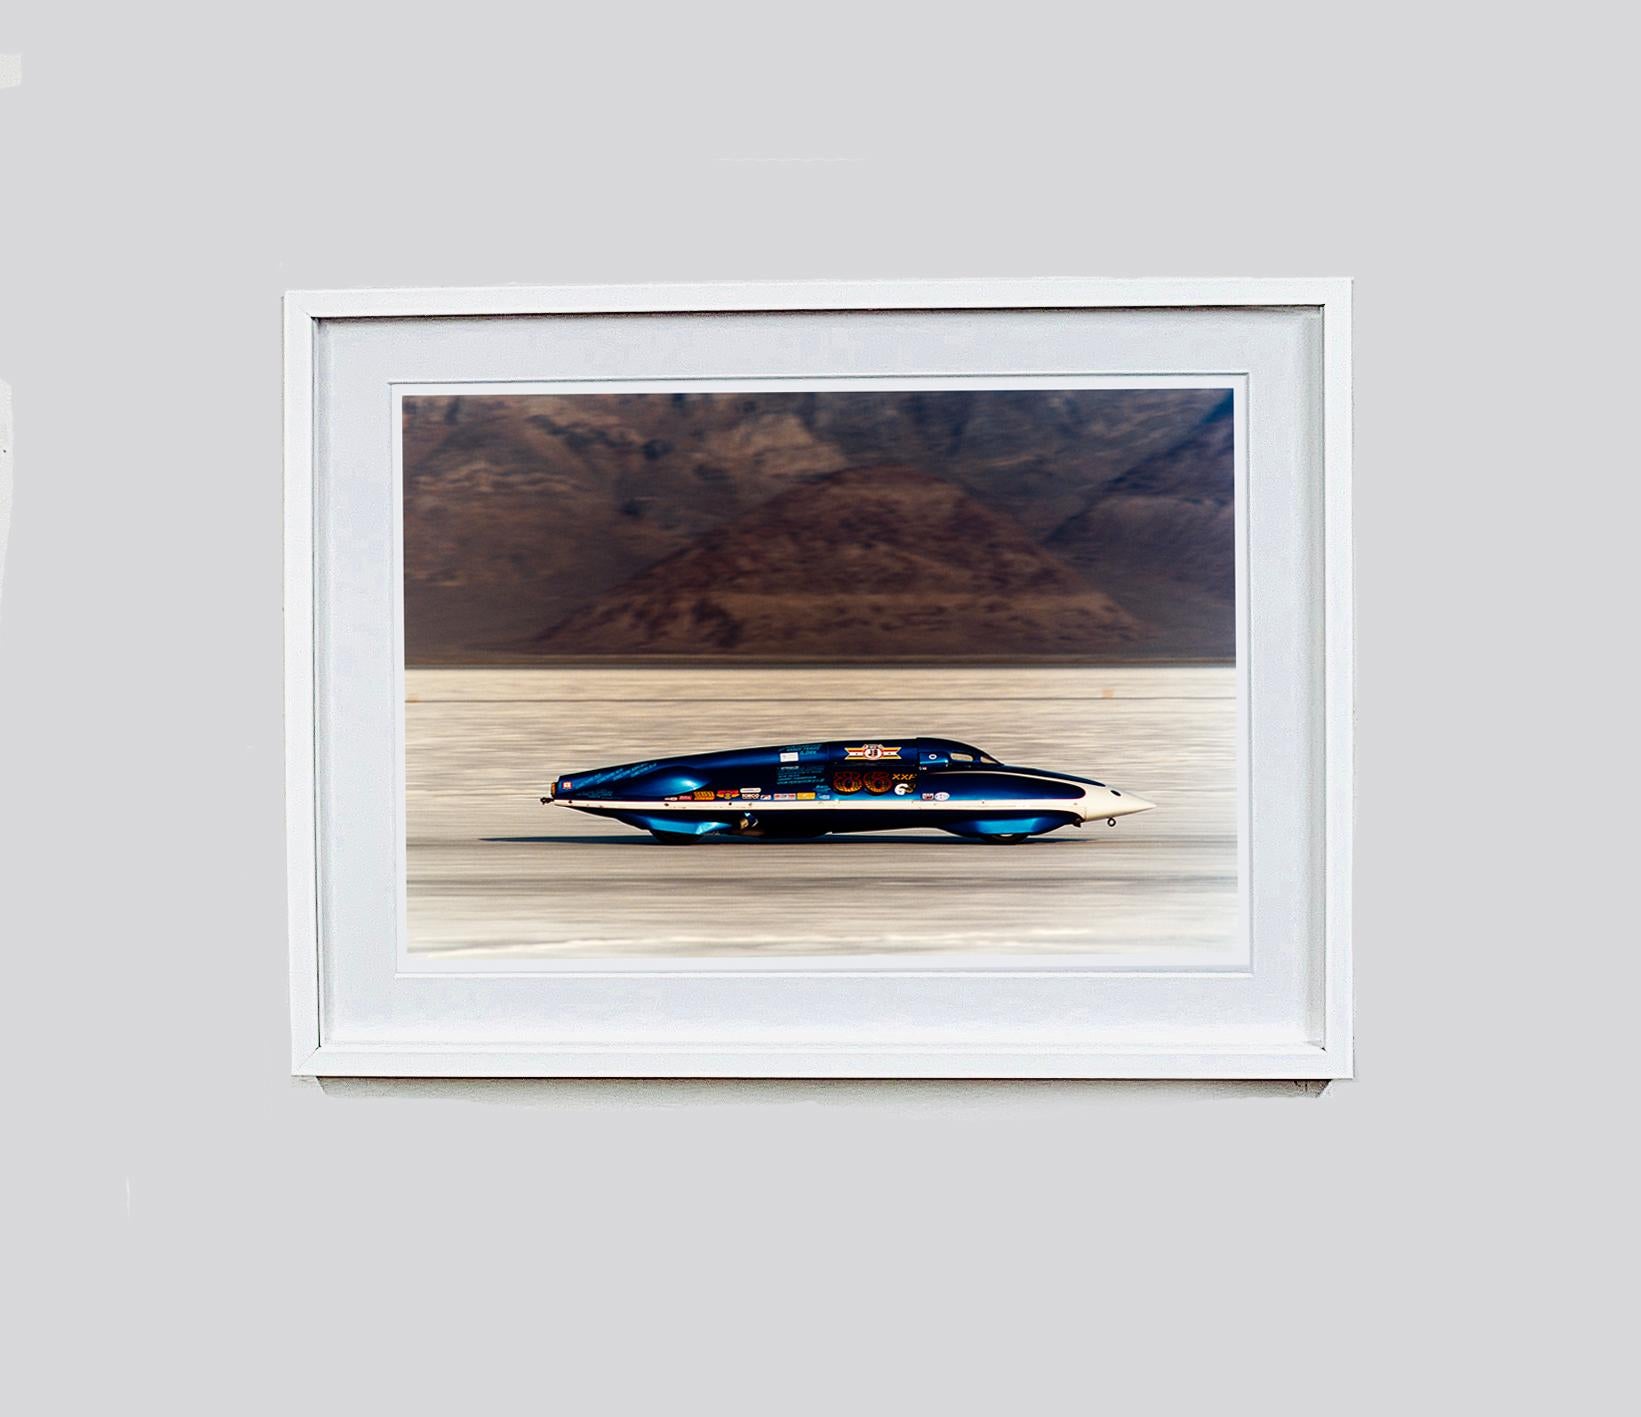 LSR Racing Streamliner, Bonneville, Utah - American Landscape Car Photo - Contemporary Photograph by Richard Heeps